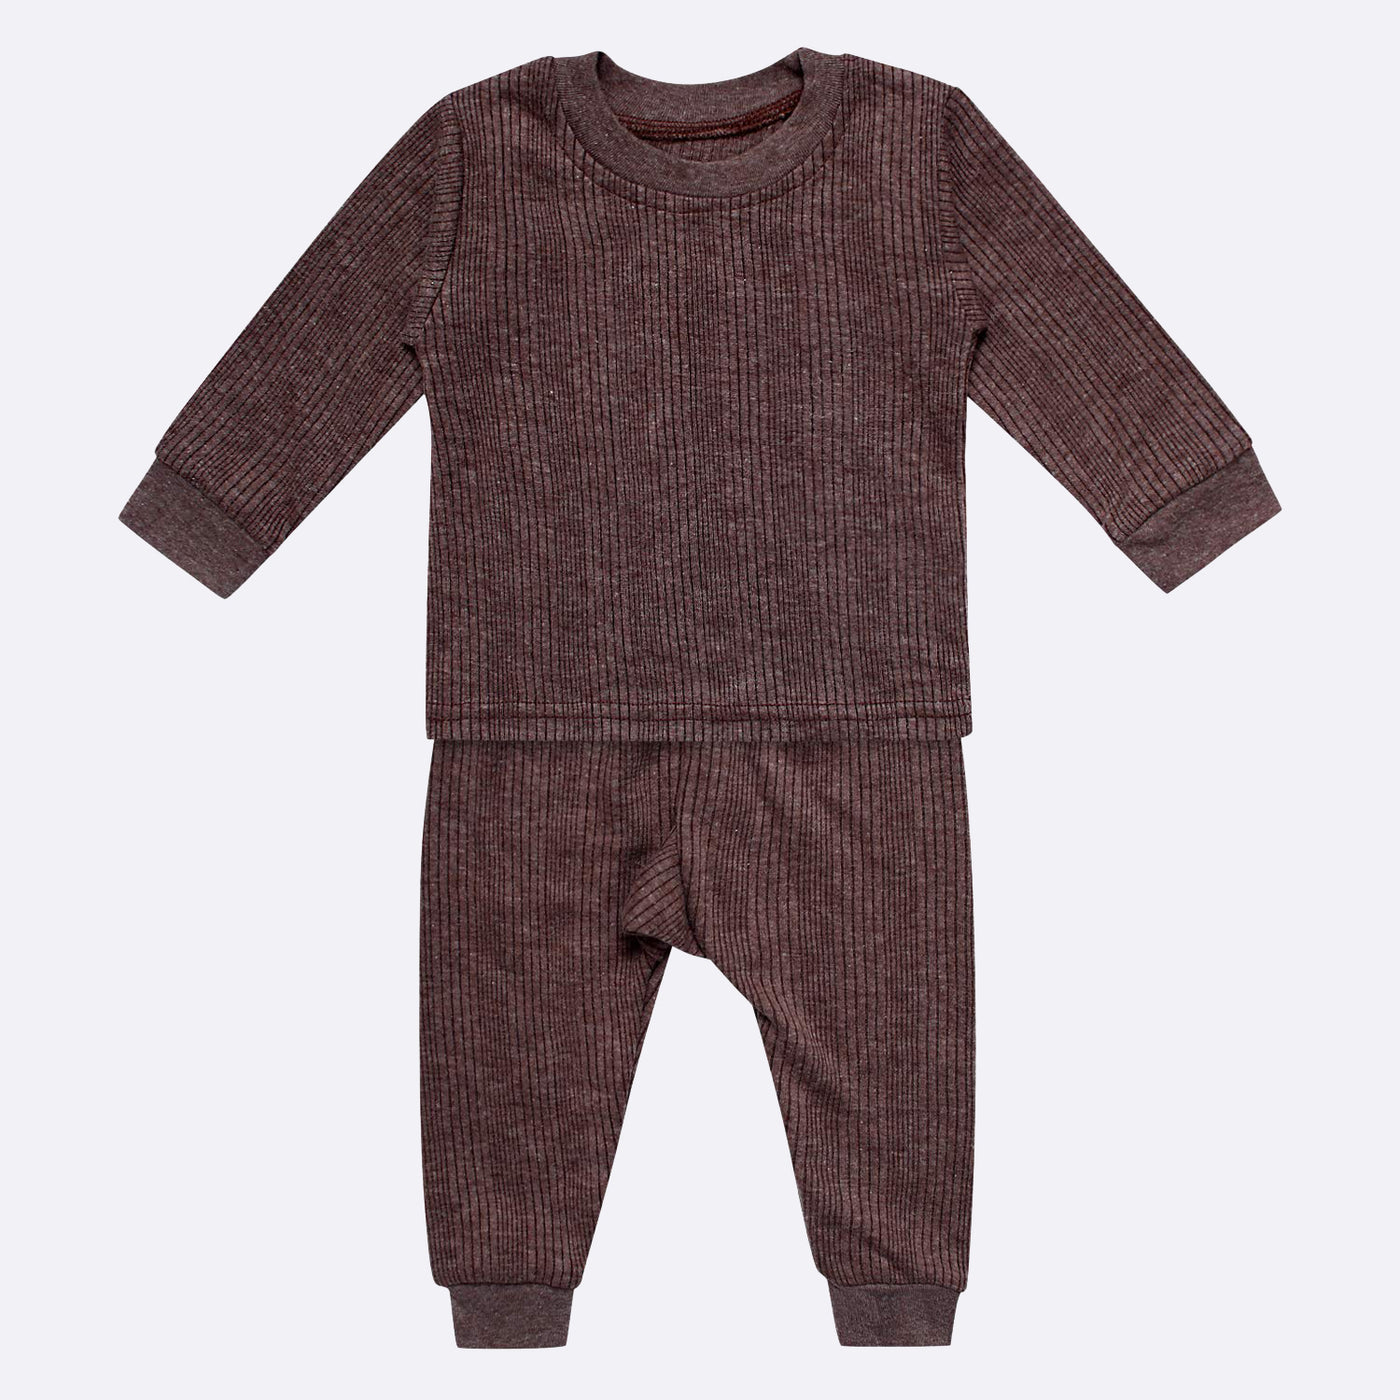 Garmahat - Cozy and Comfy Thermal Top and Pyjama Set (Brown, Pack of 1)